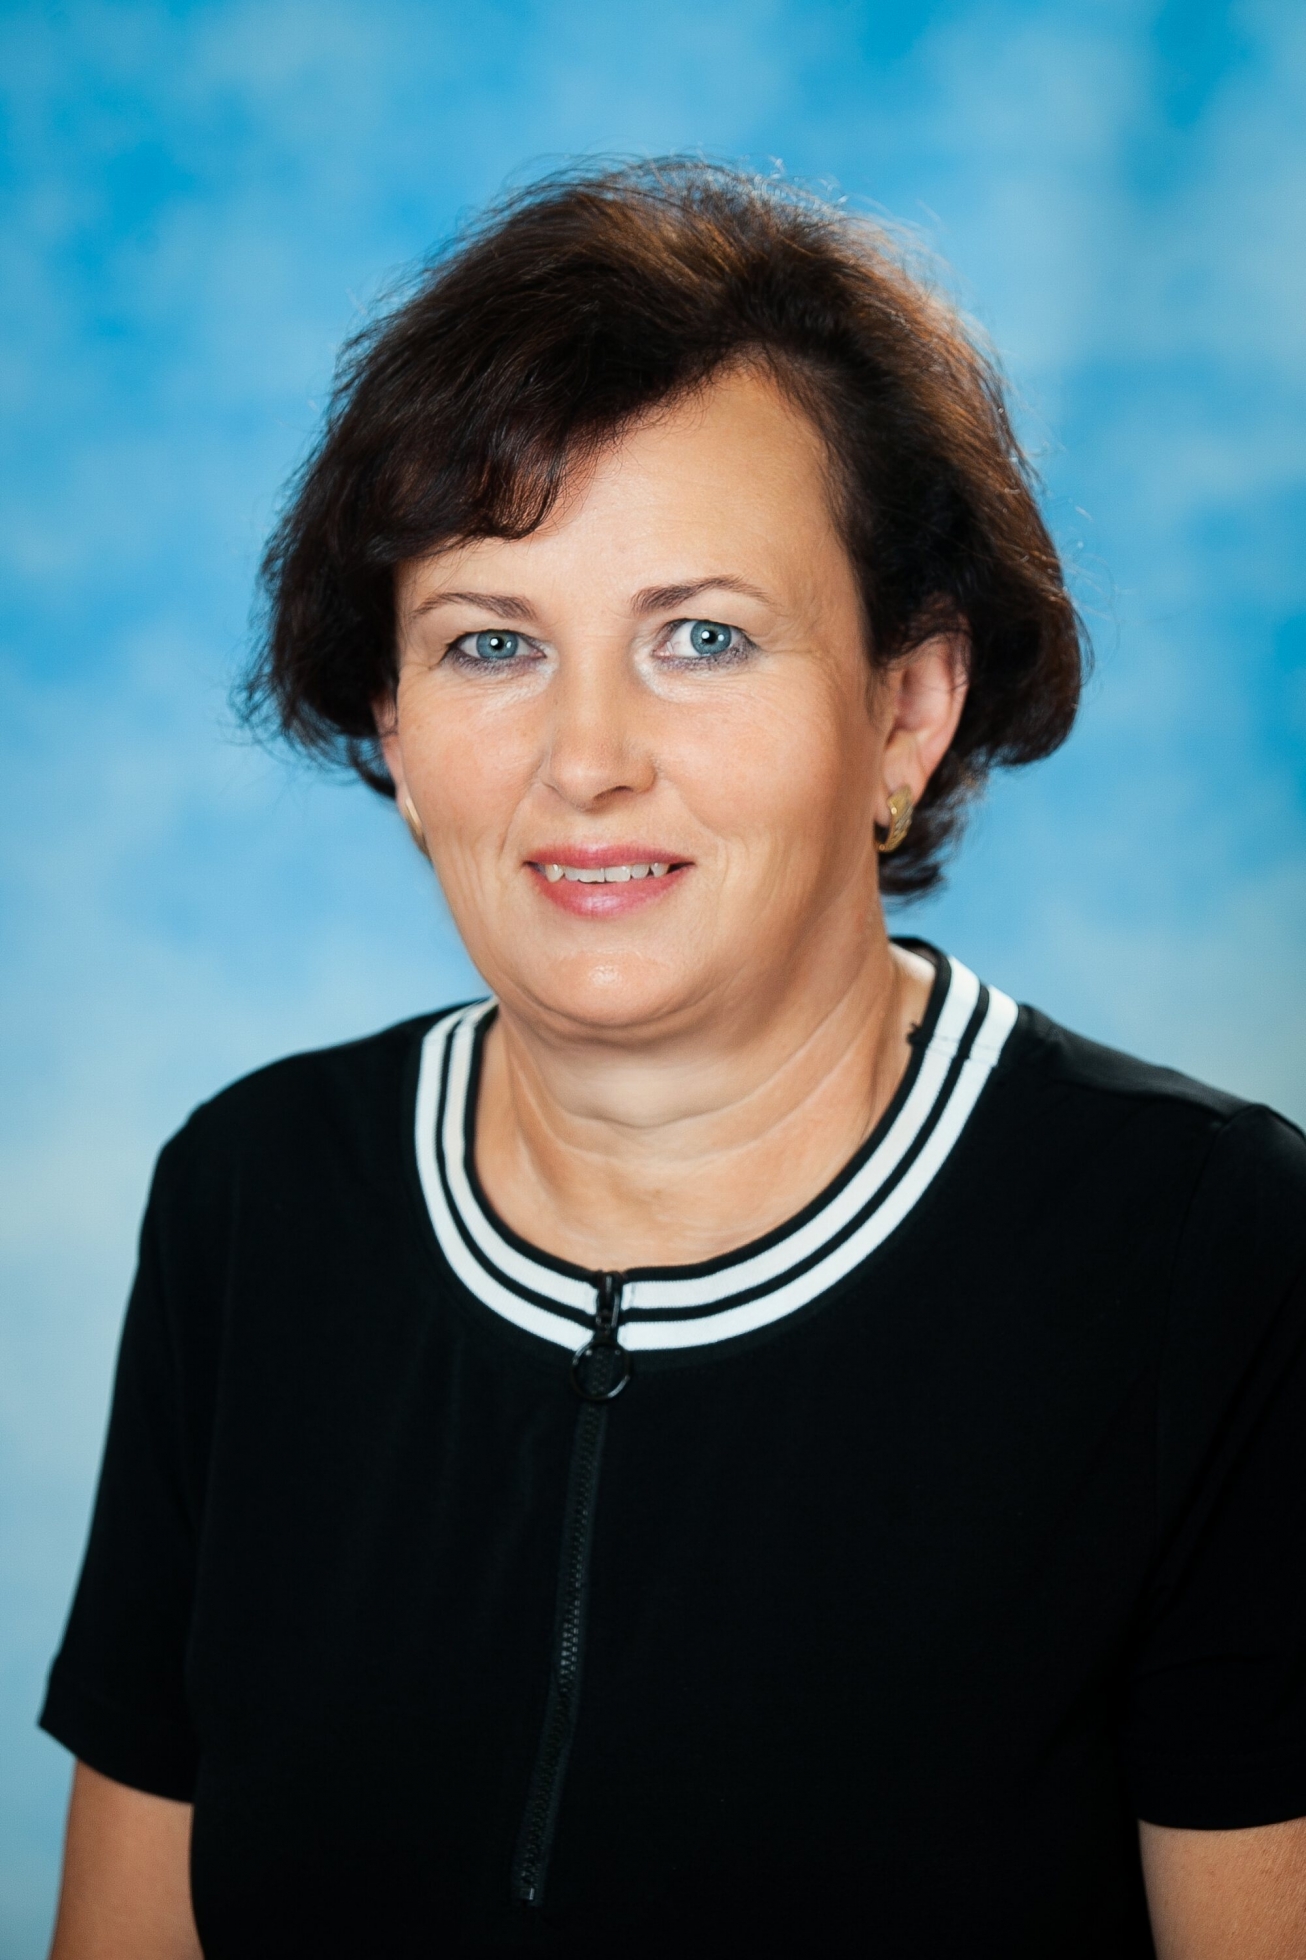 Renata Tvarohová